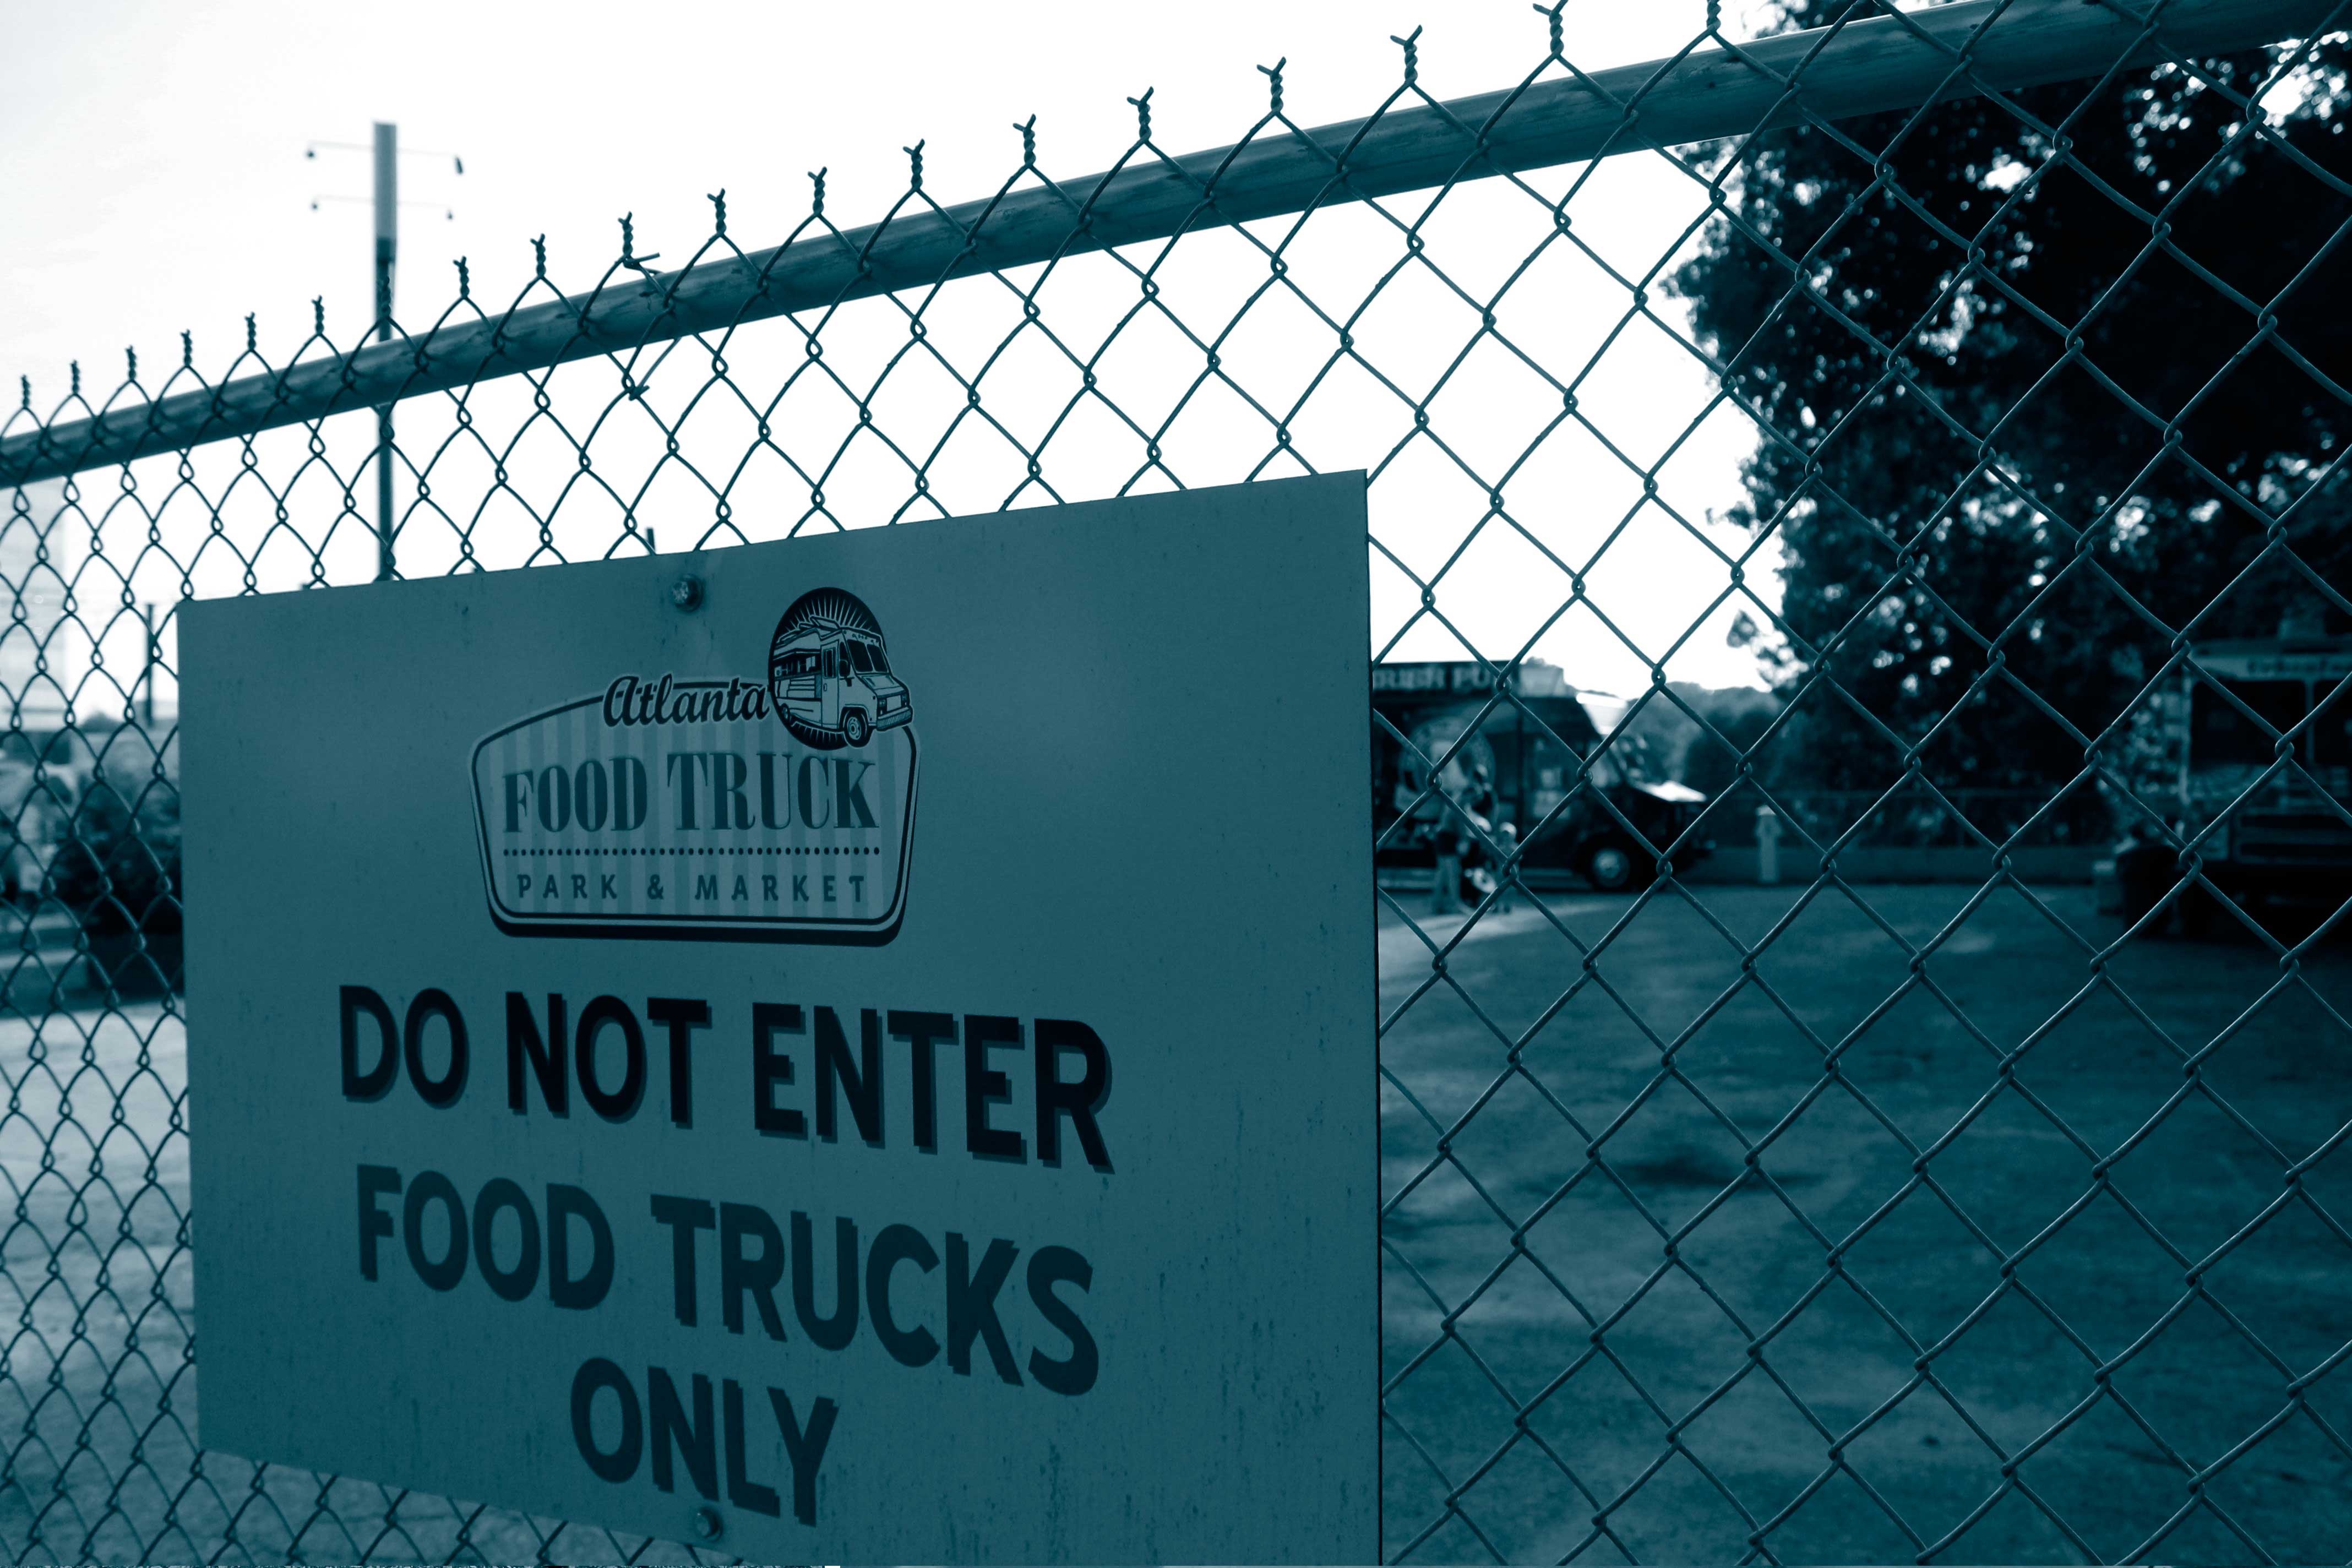 Food trucks only entrance sign at Atlanta Food Truck Park and Market.